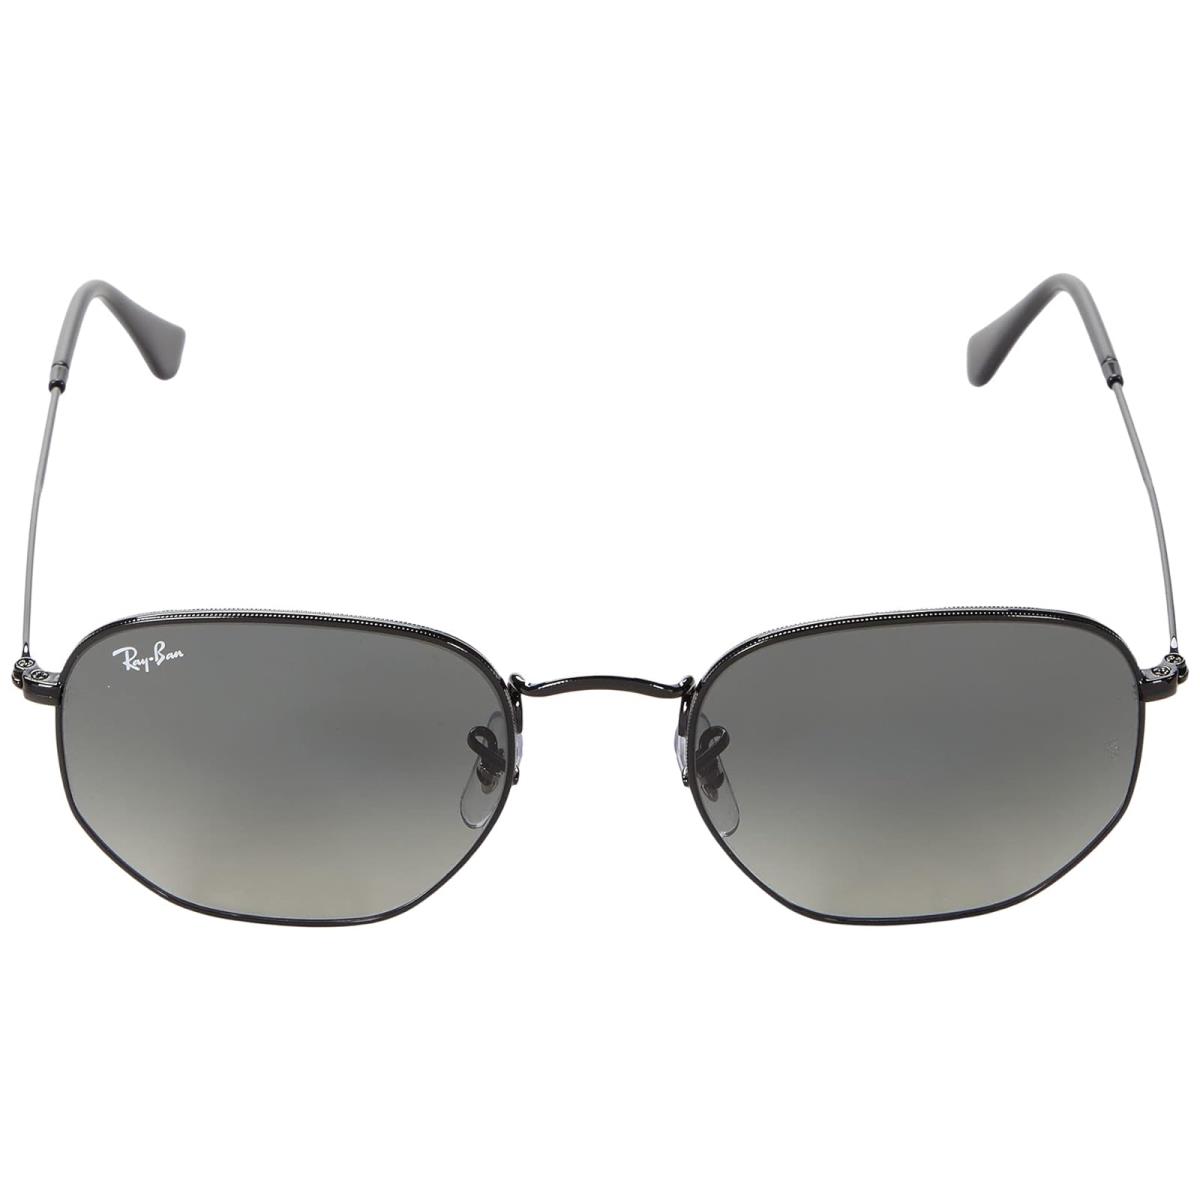 Unisex Sunglasses Ray-ban 0RB3548 Hexagonal - Frame: